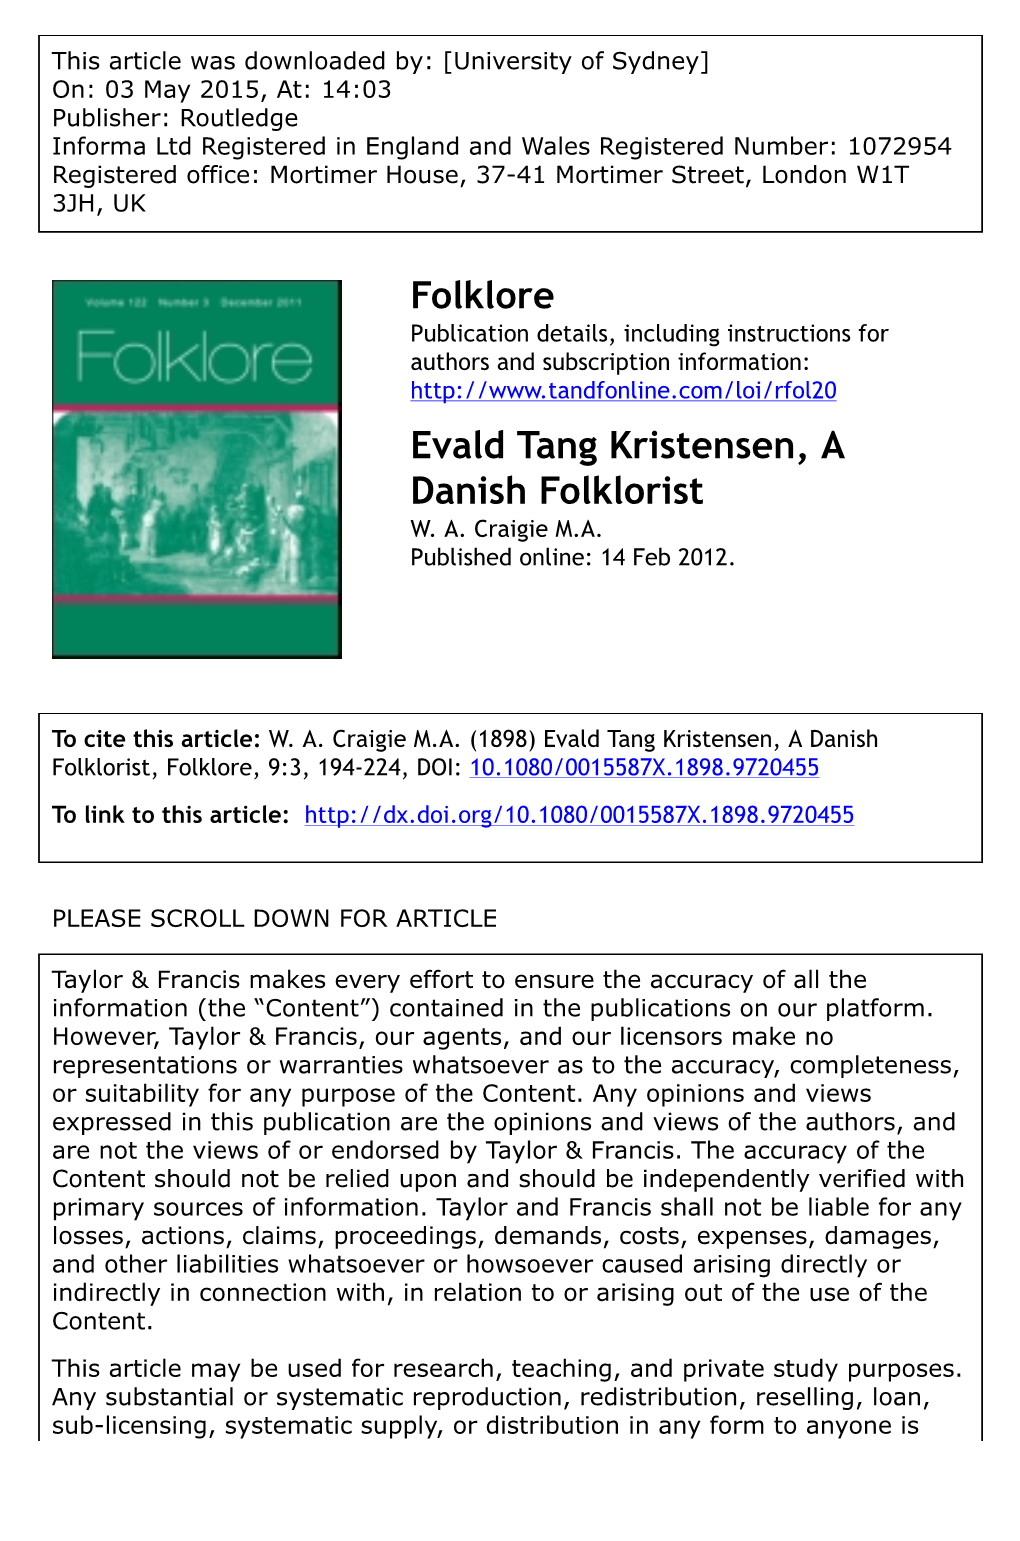 Folklore Evald Tang Kristensen, a Danish Folklorist